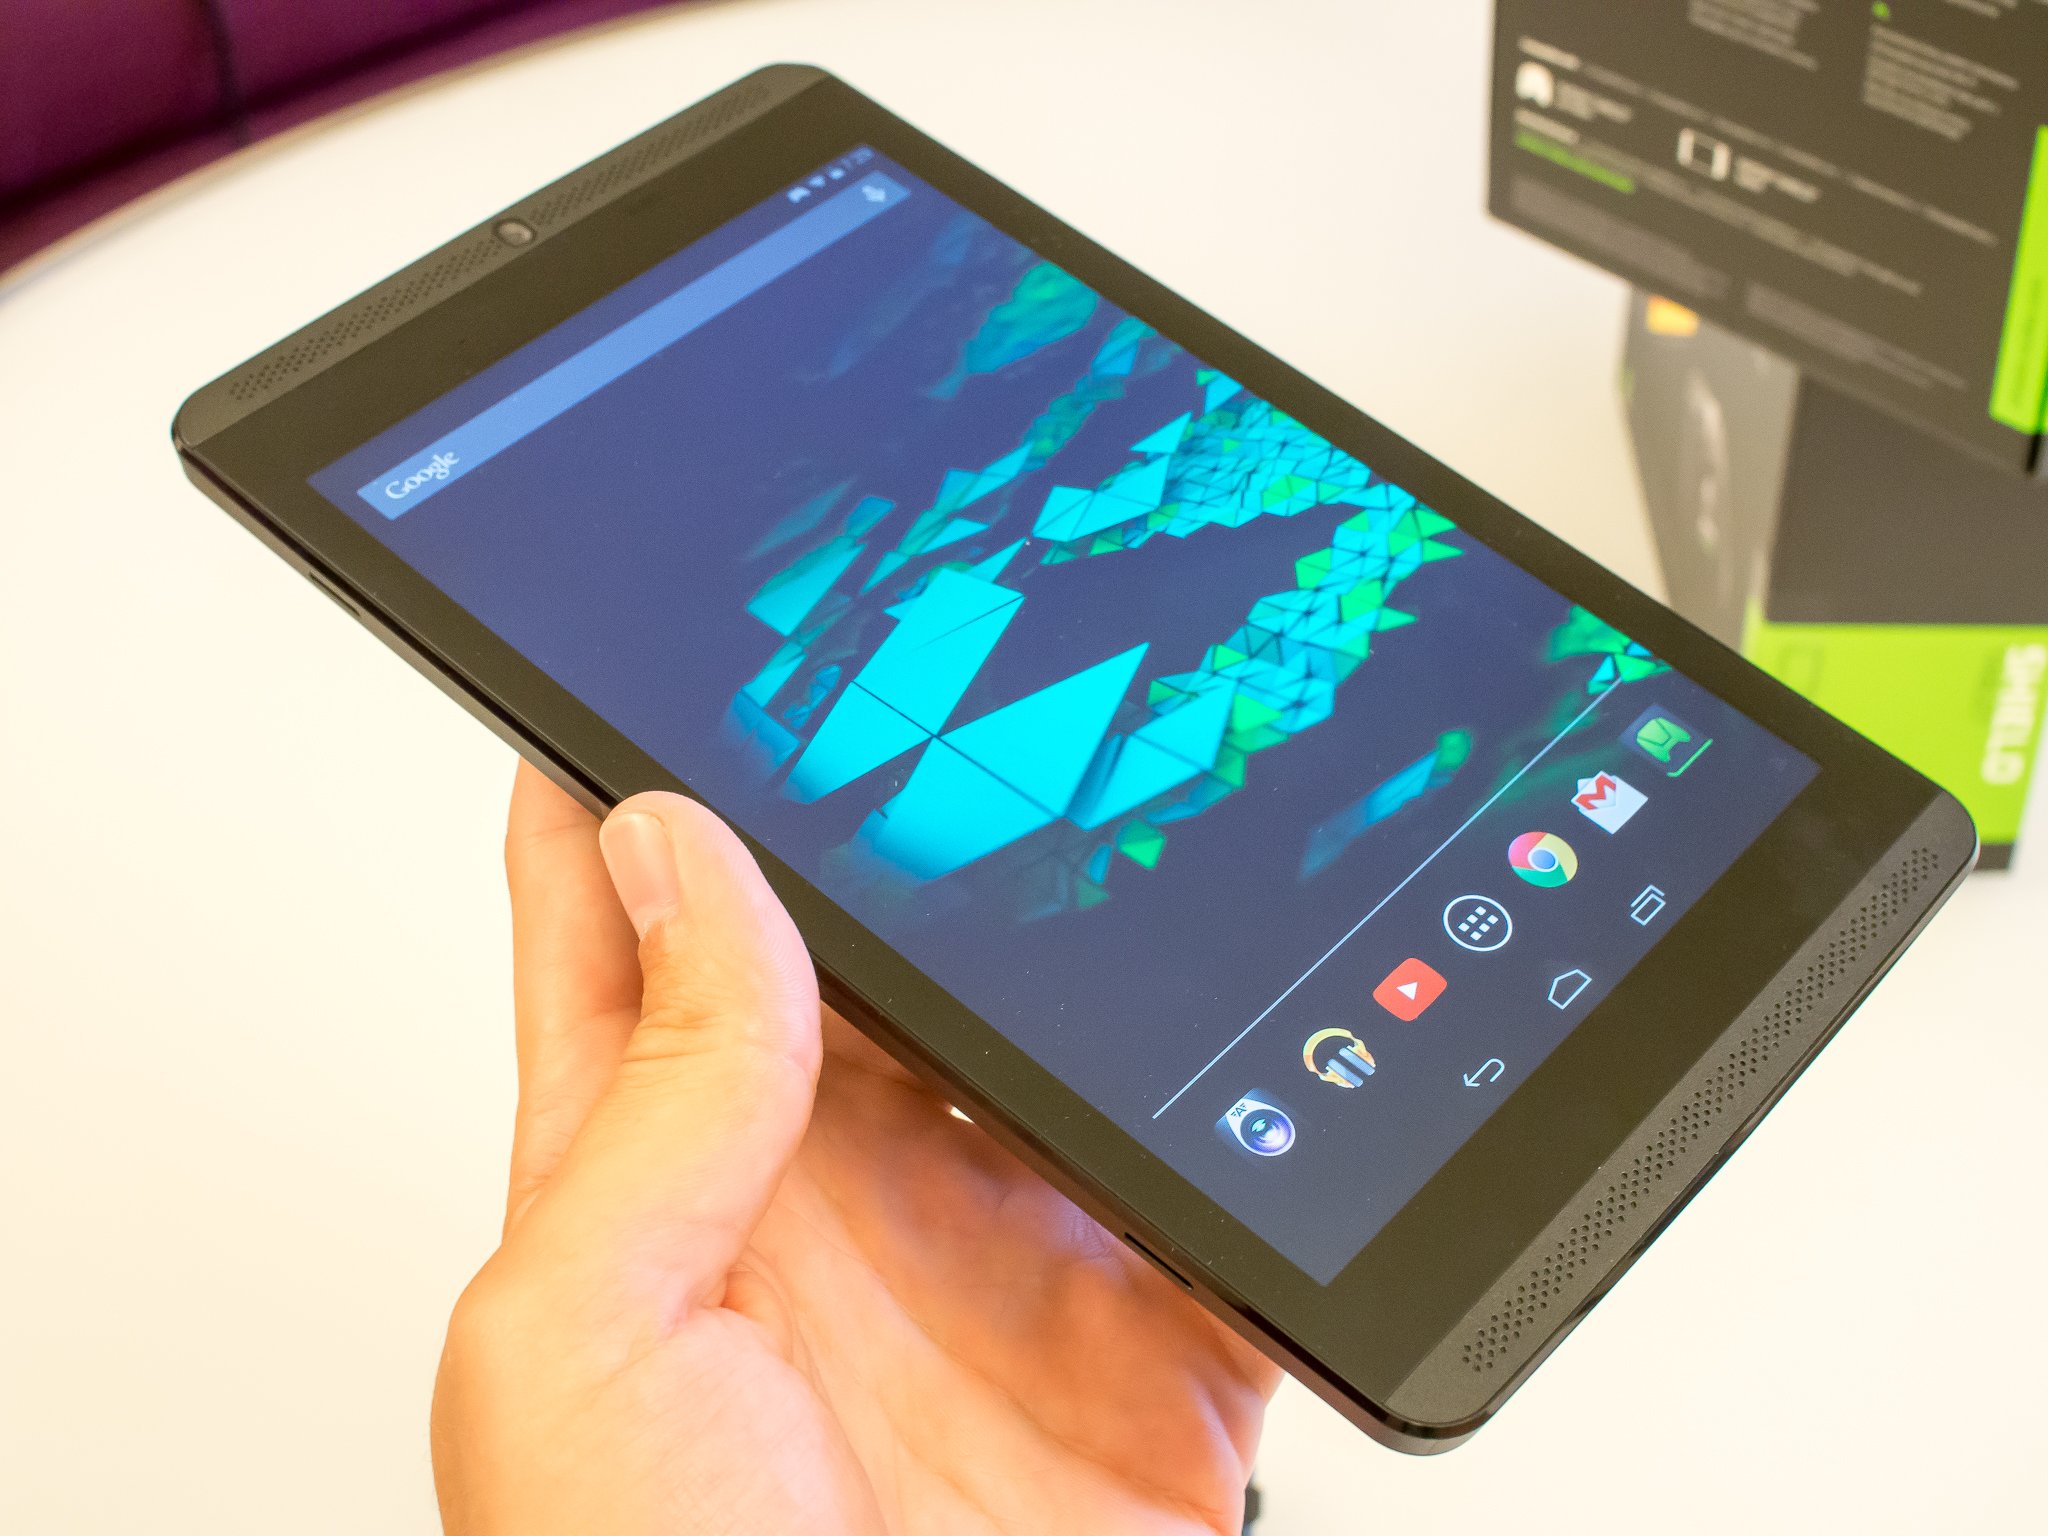 Shield Tablet k1 процессор. Хорошие андроиды. Популярные андроиды 2022. Powered by Android 9. Самые качественные андроиды